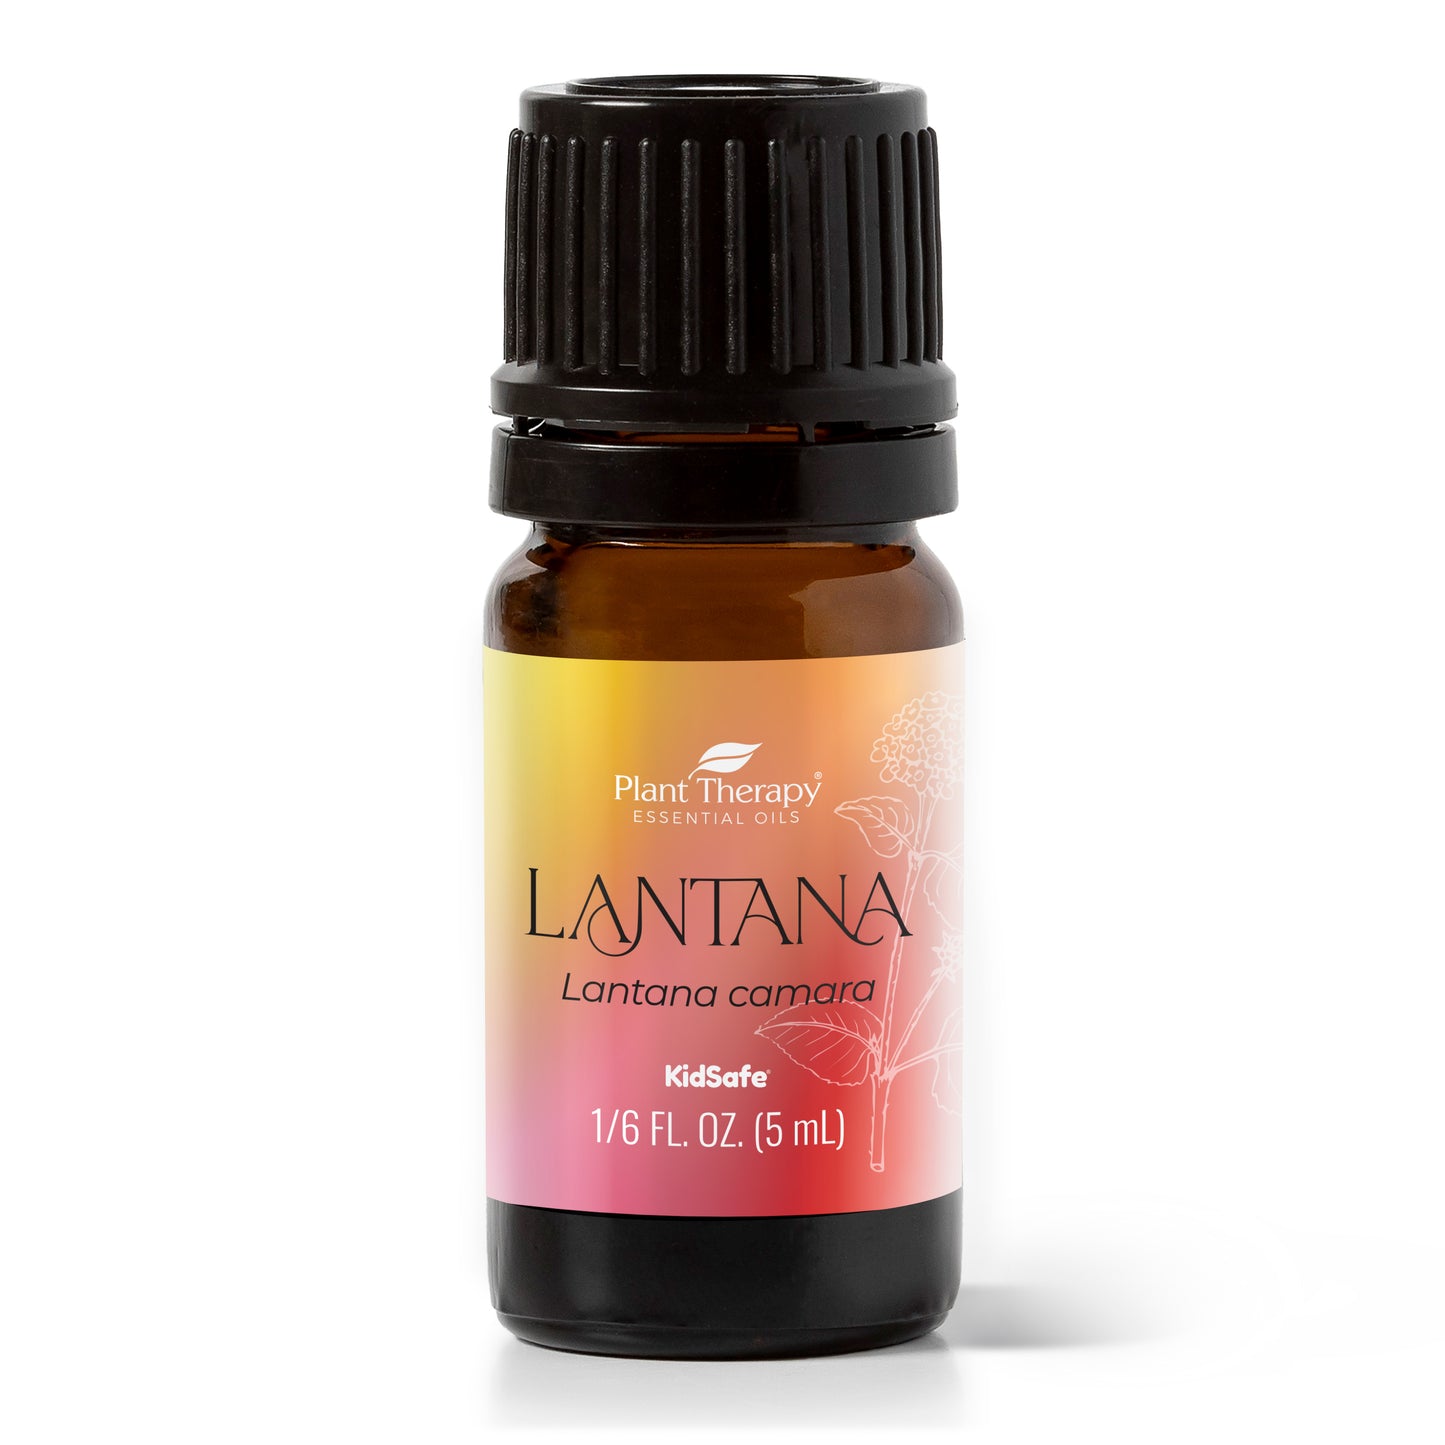 Lantana Essential Oil